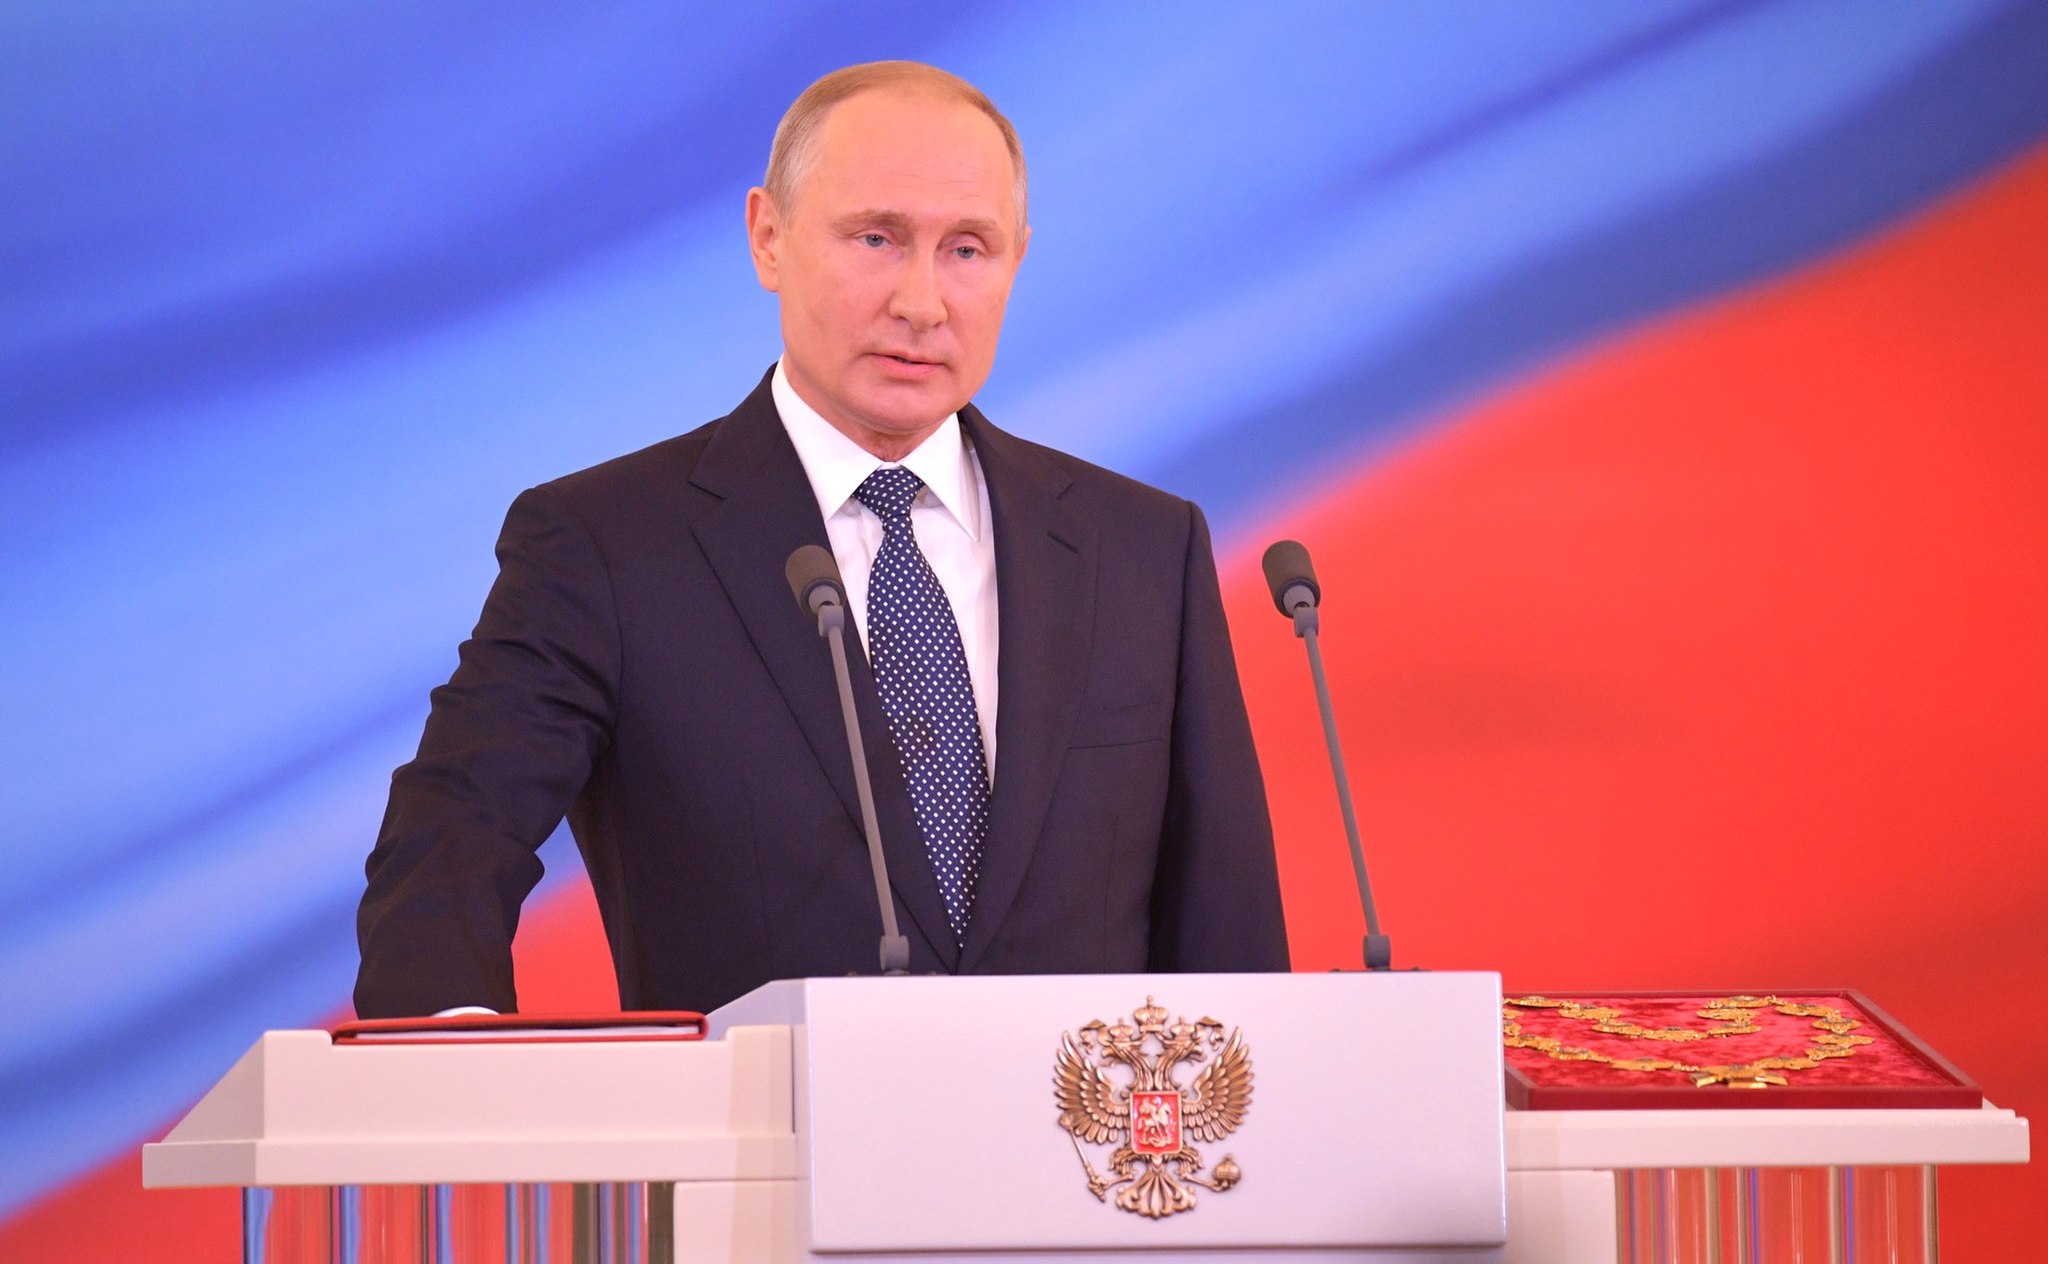 Bild: Kremlin.ru, 2018 inauguration of Vladimir Putin, CC BY 4.0, via Wikimedia Commons (Bildgröße geändert)